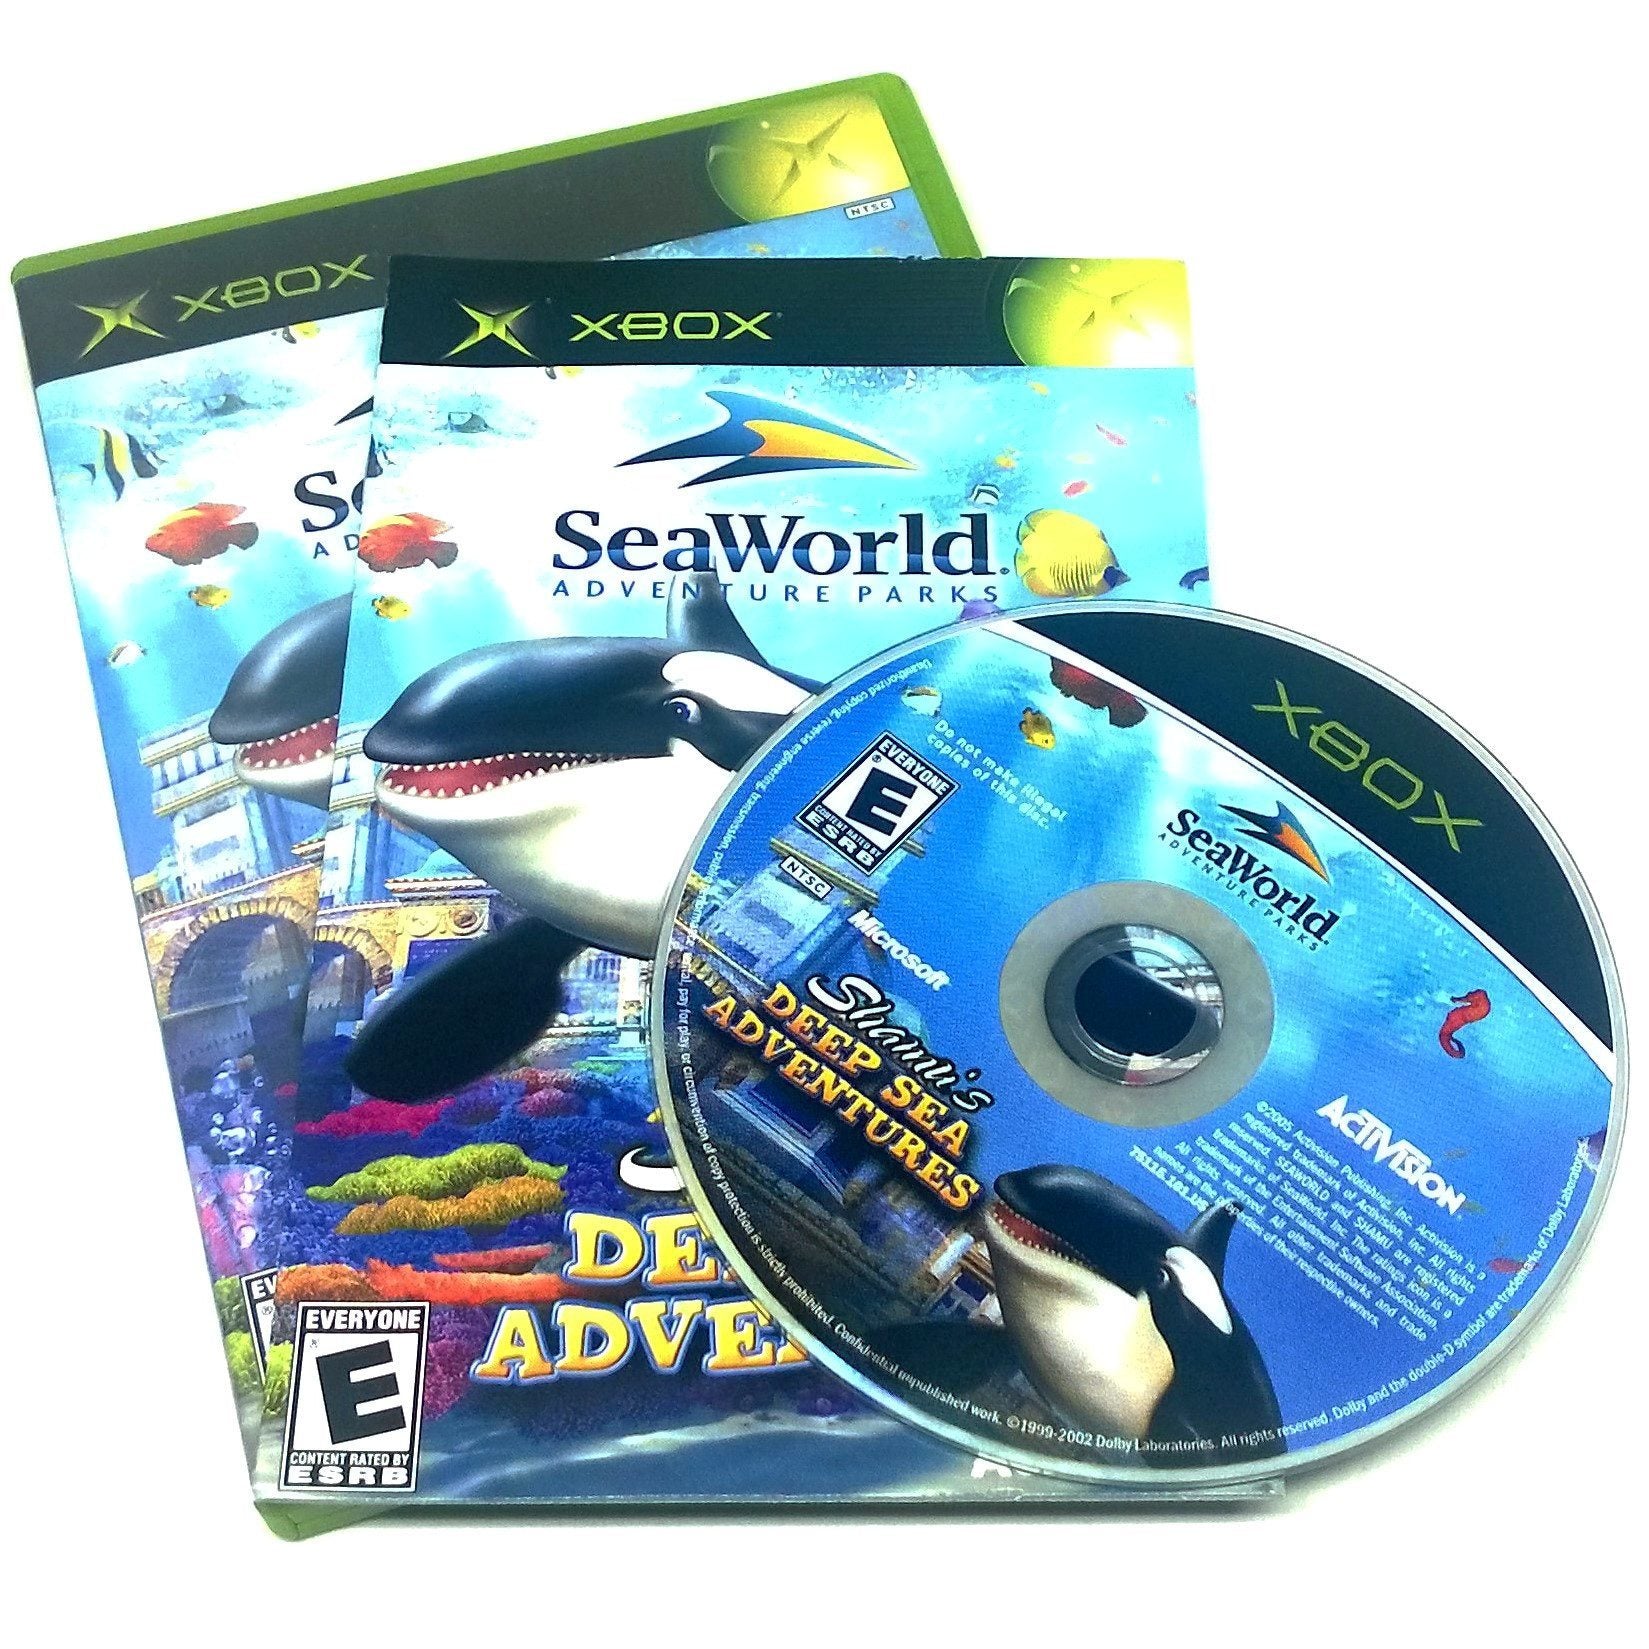 Game - SeaWorld: Shamu's Deep Sea Adventures